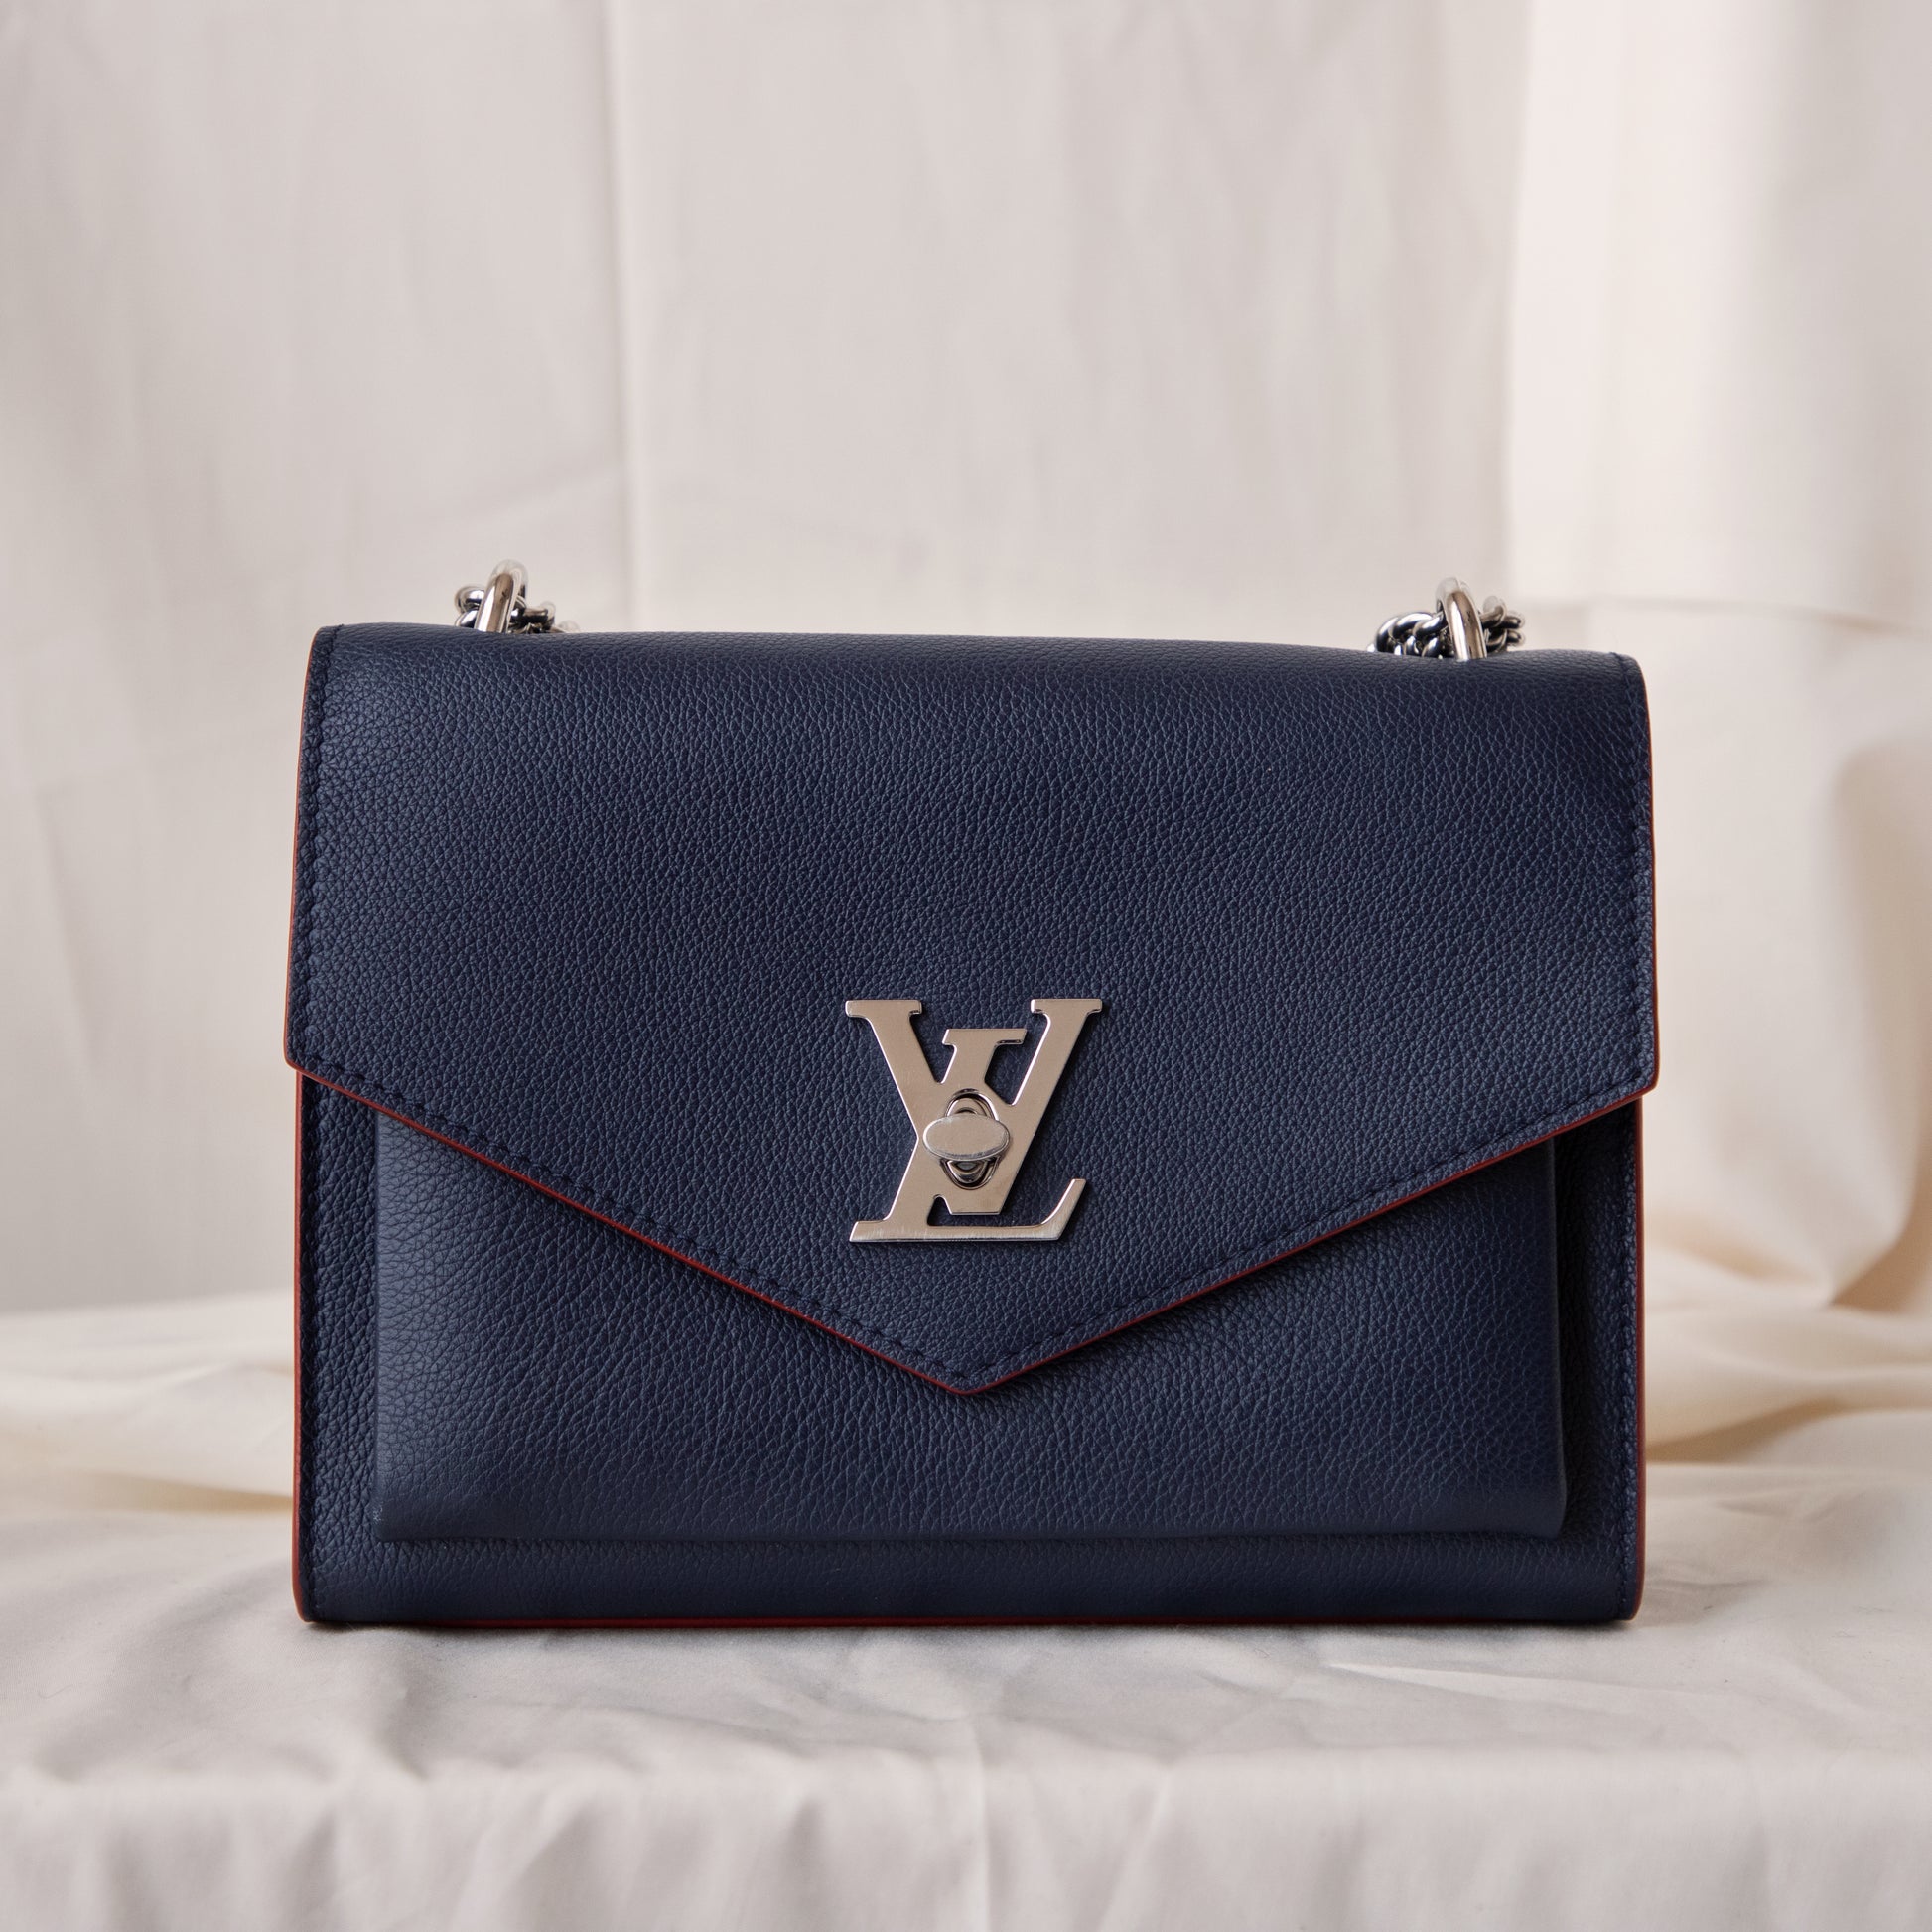 New Authentic Louis Vuitton MyLockMe BB, Papyrus Cream